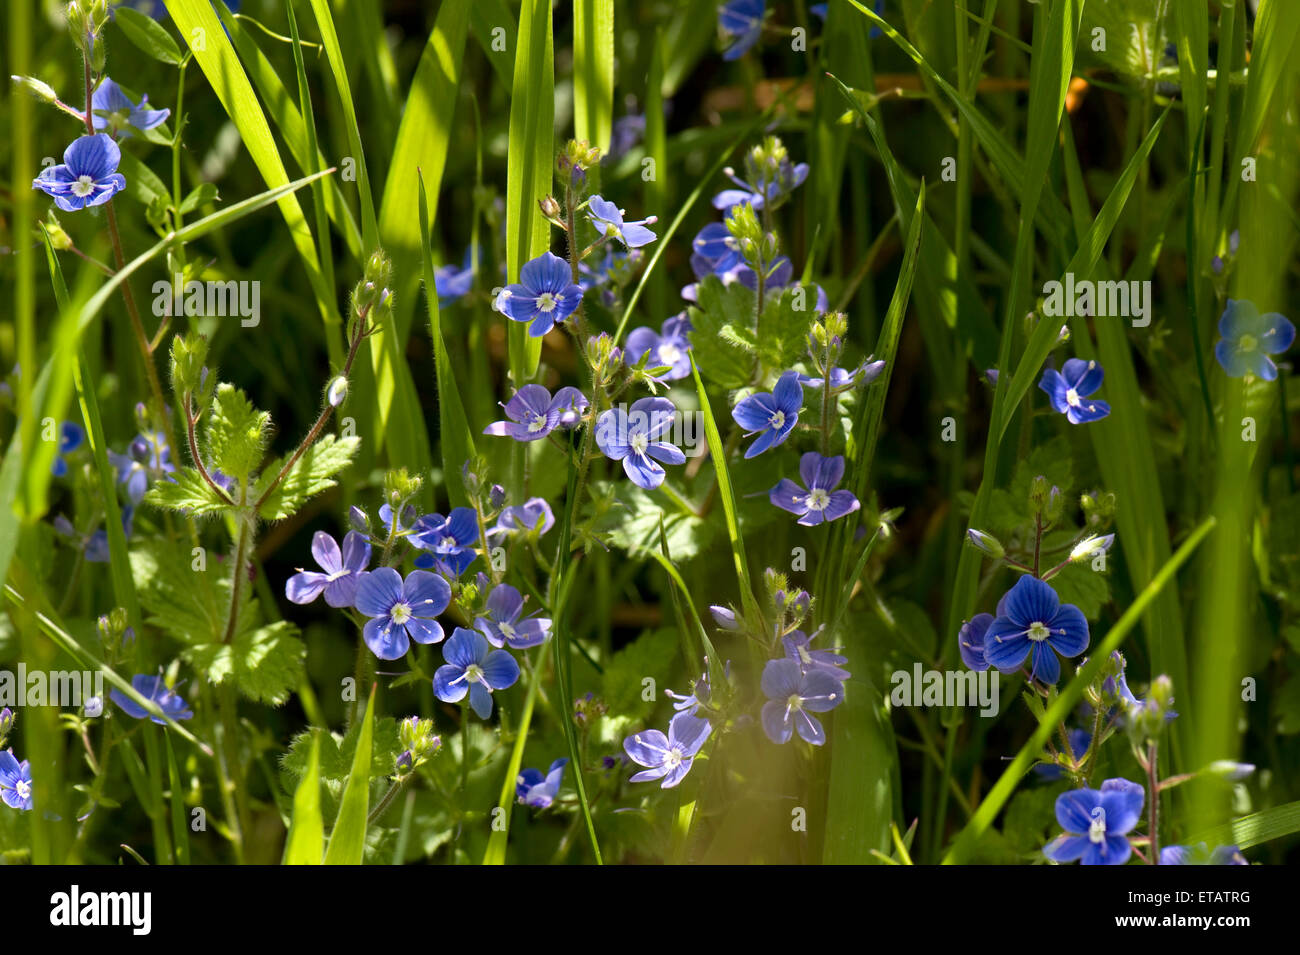 Bird's-eye sppedweel or germander speedwell, Veronica chamaedrys, blue flowers in grassland back lit by sunlight, Berkshire, Jun Stock Photo